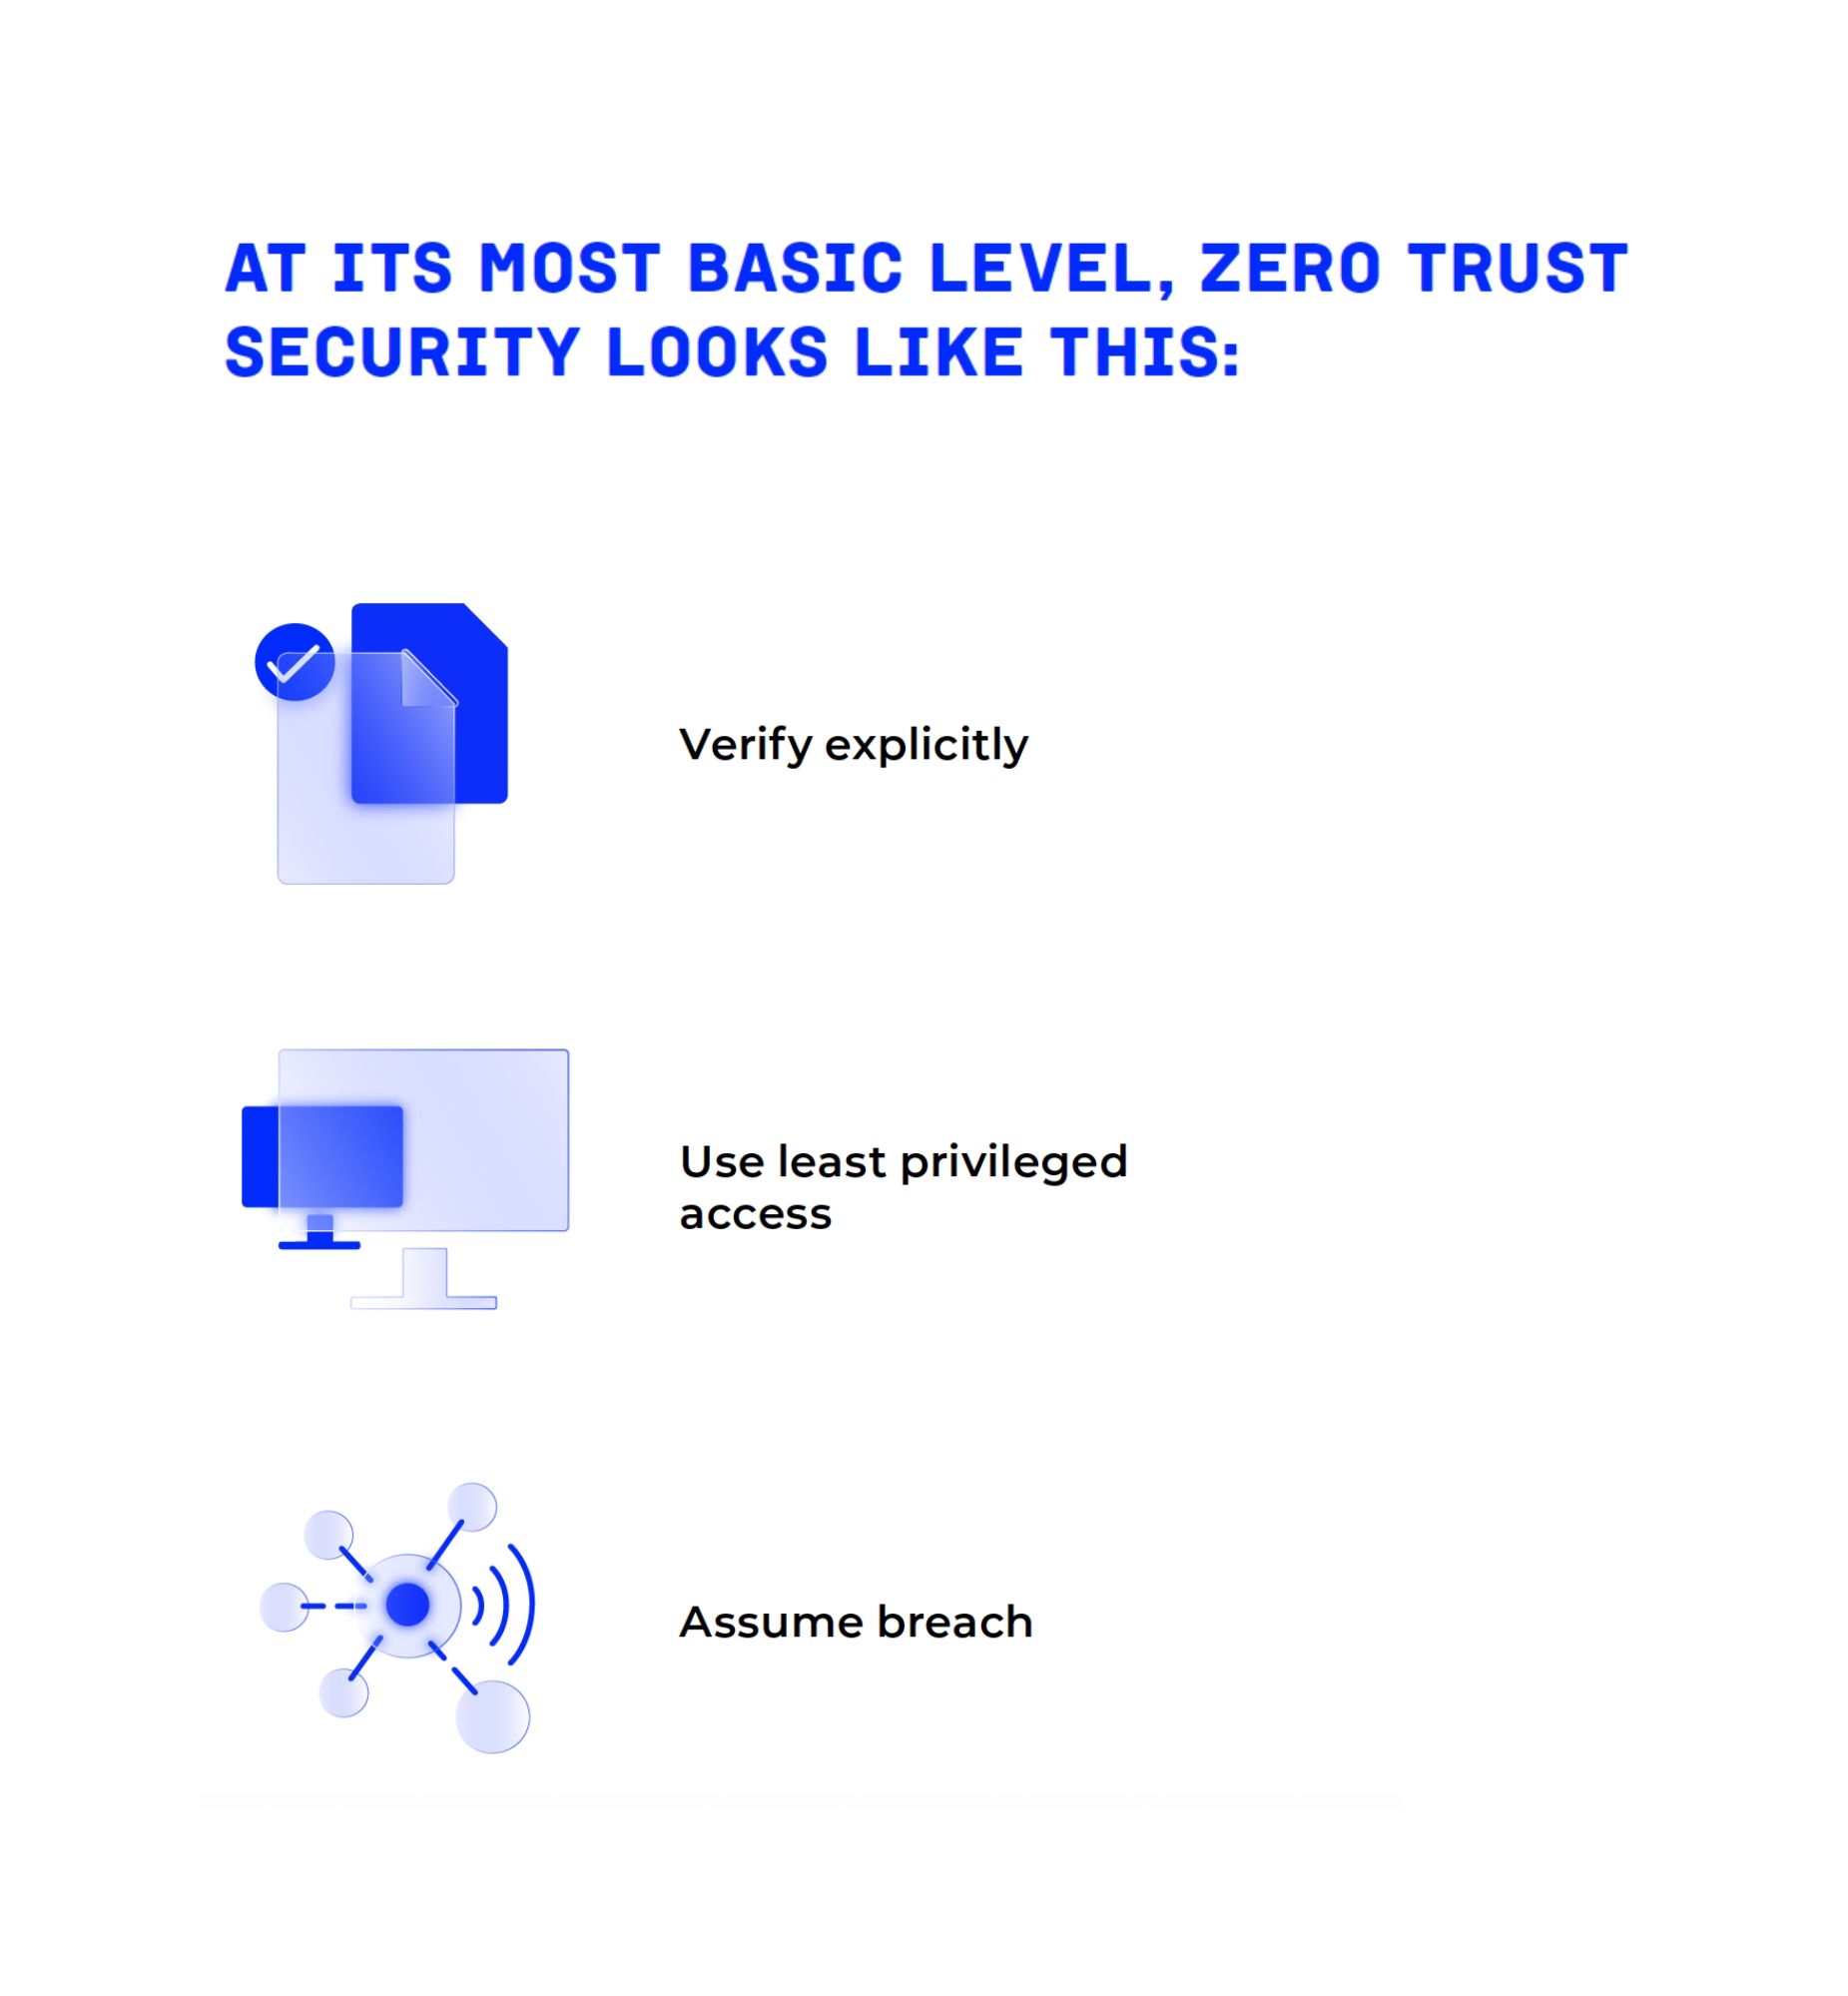 Infographic detailing basics of Zero Trust